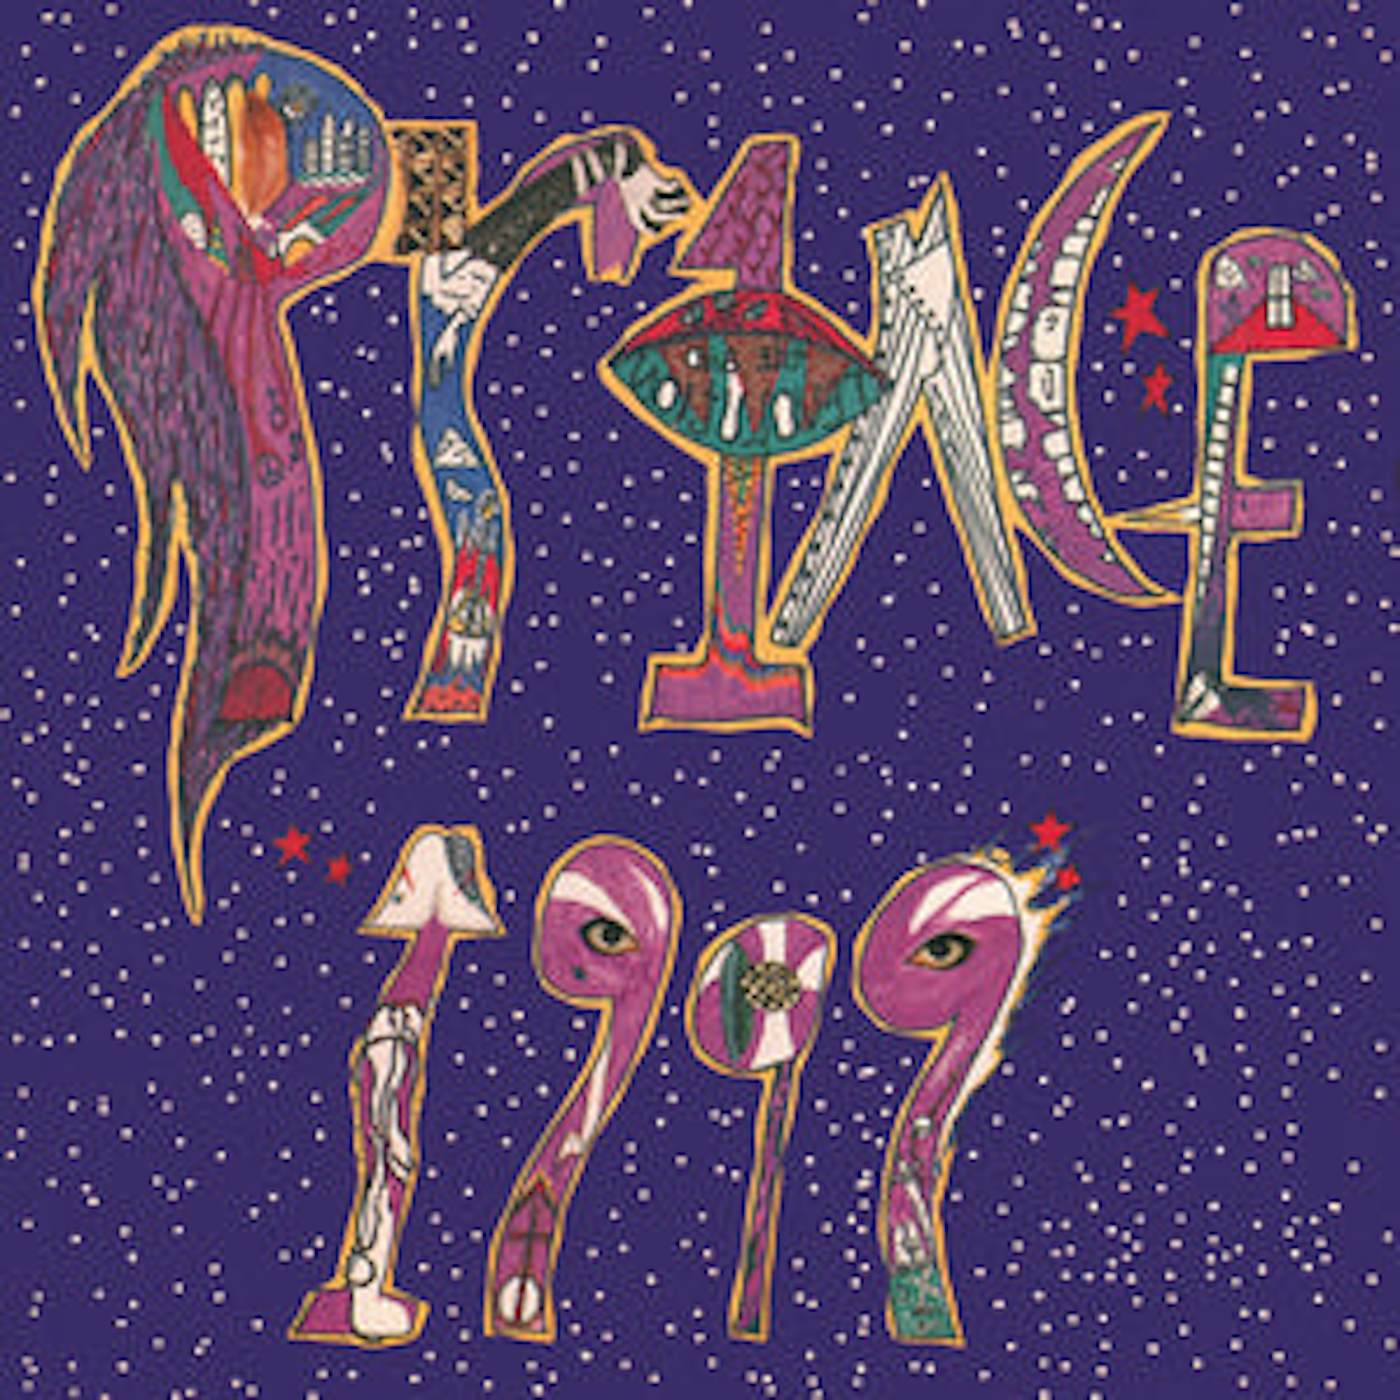 Prince LP Vinyl Record - 19 99